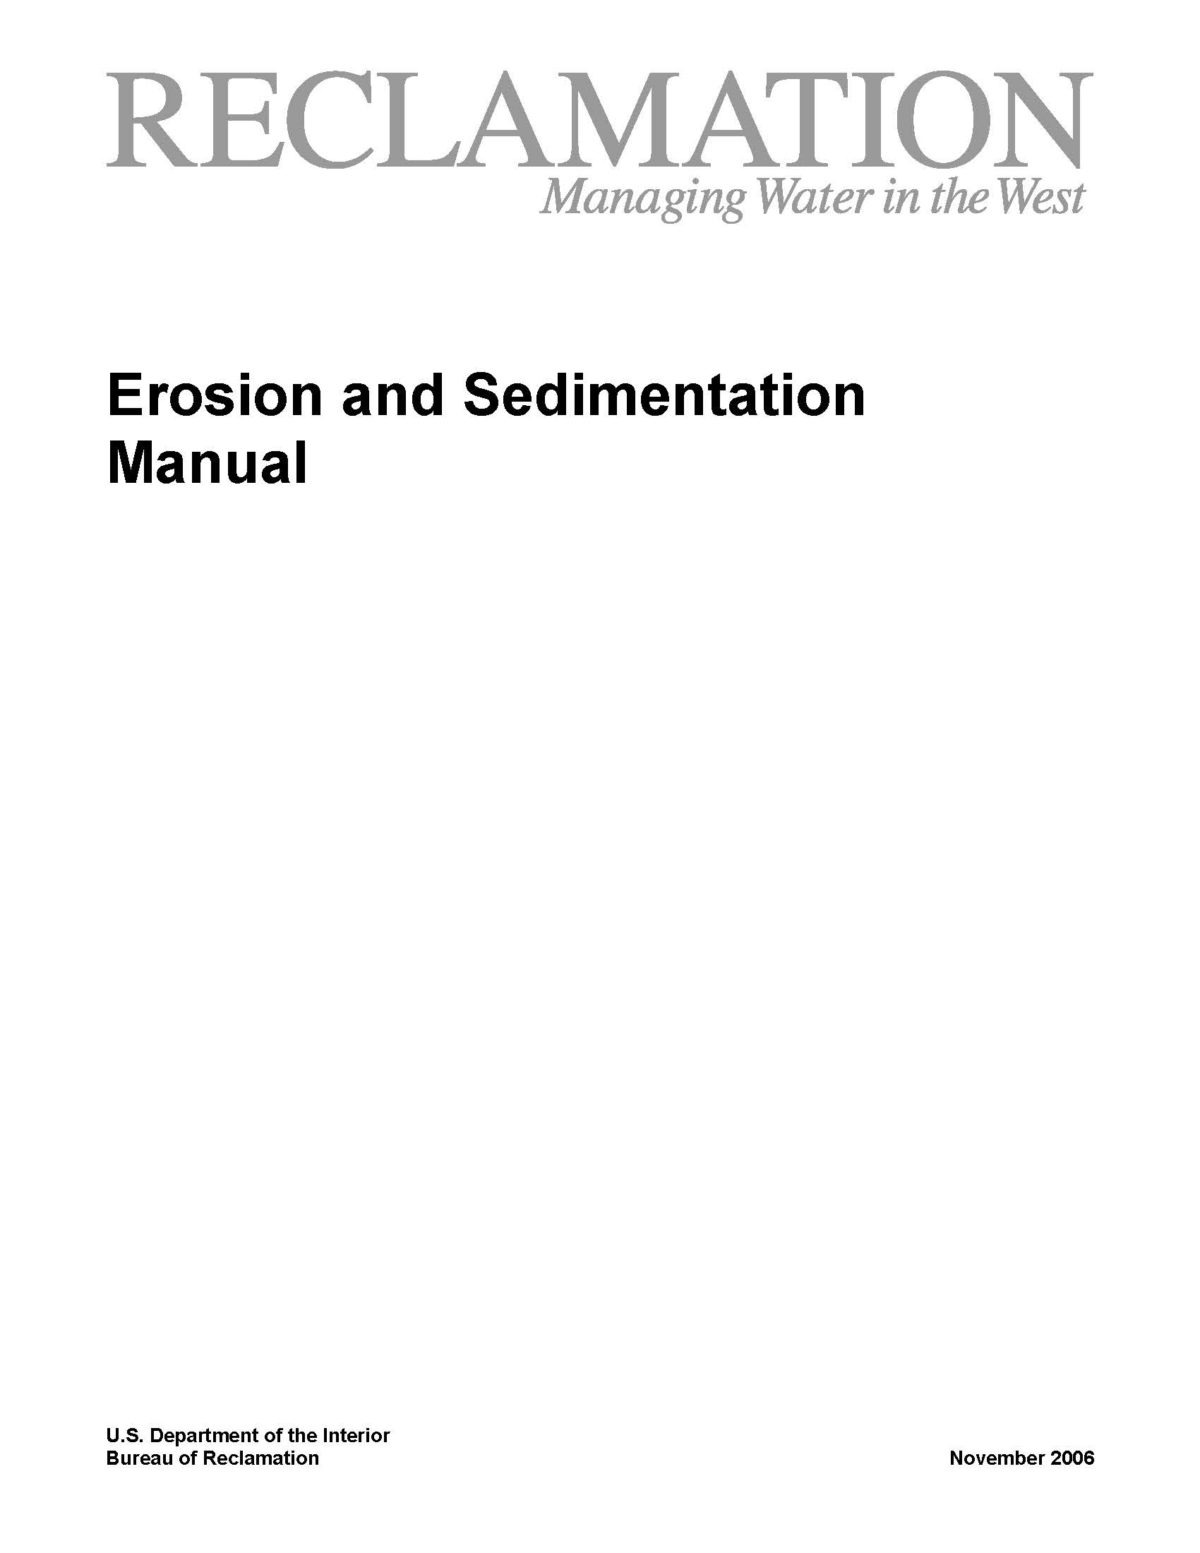 Erosion and Sediment Manual